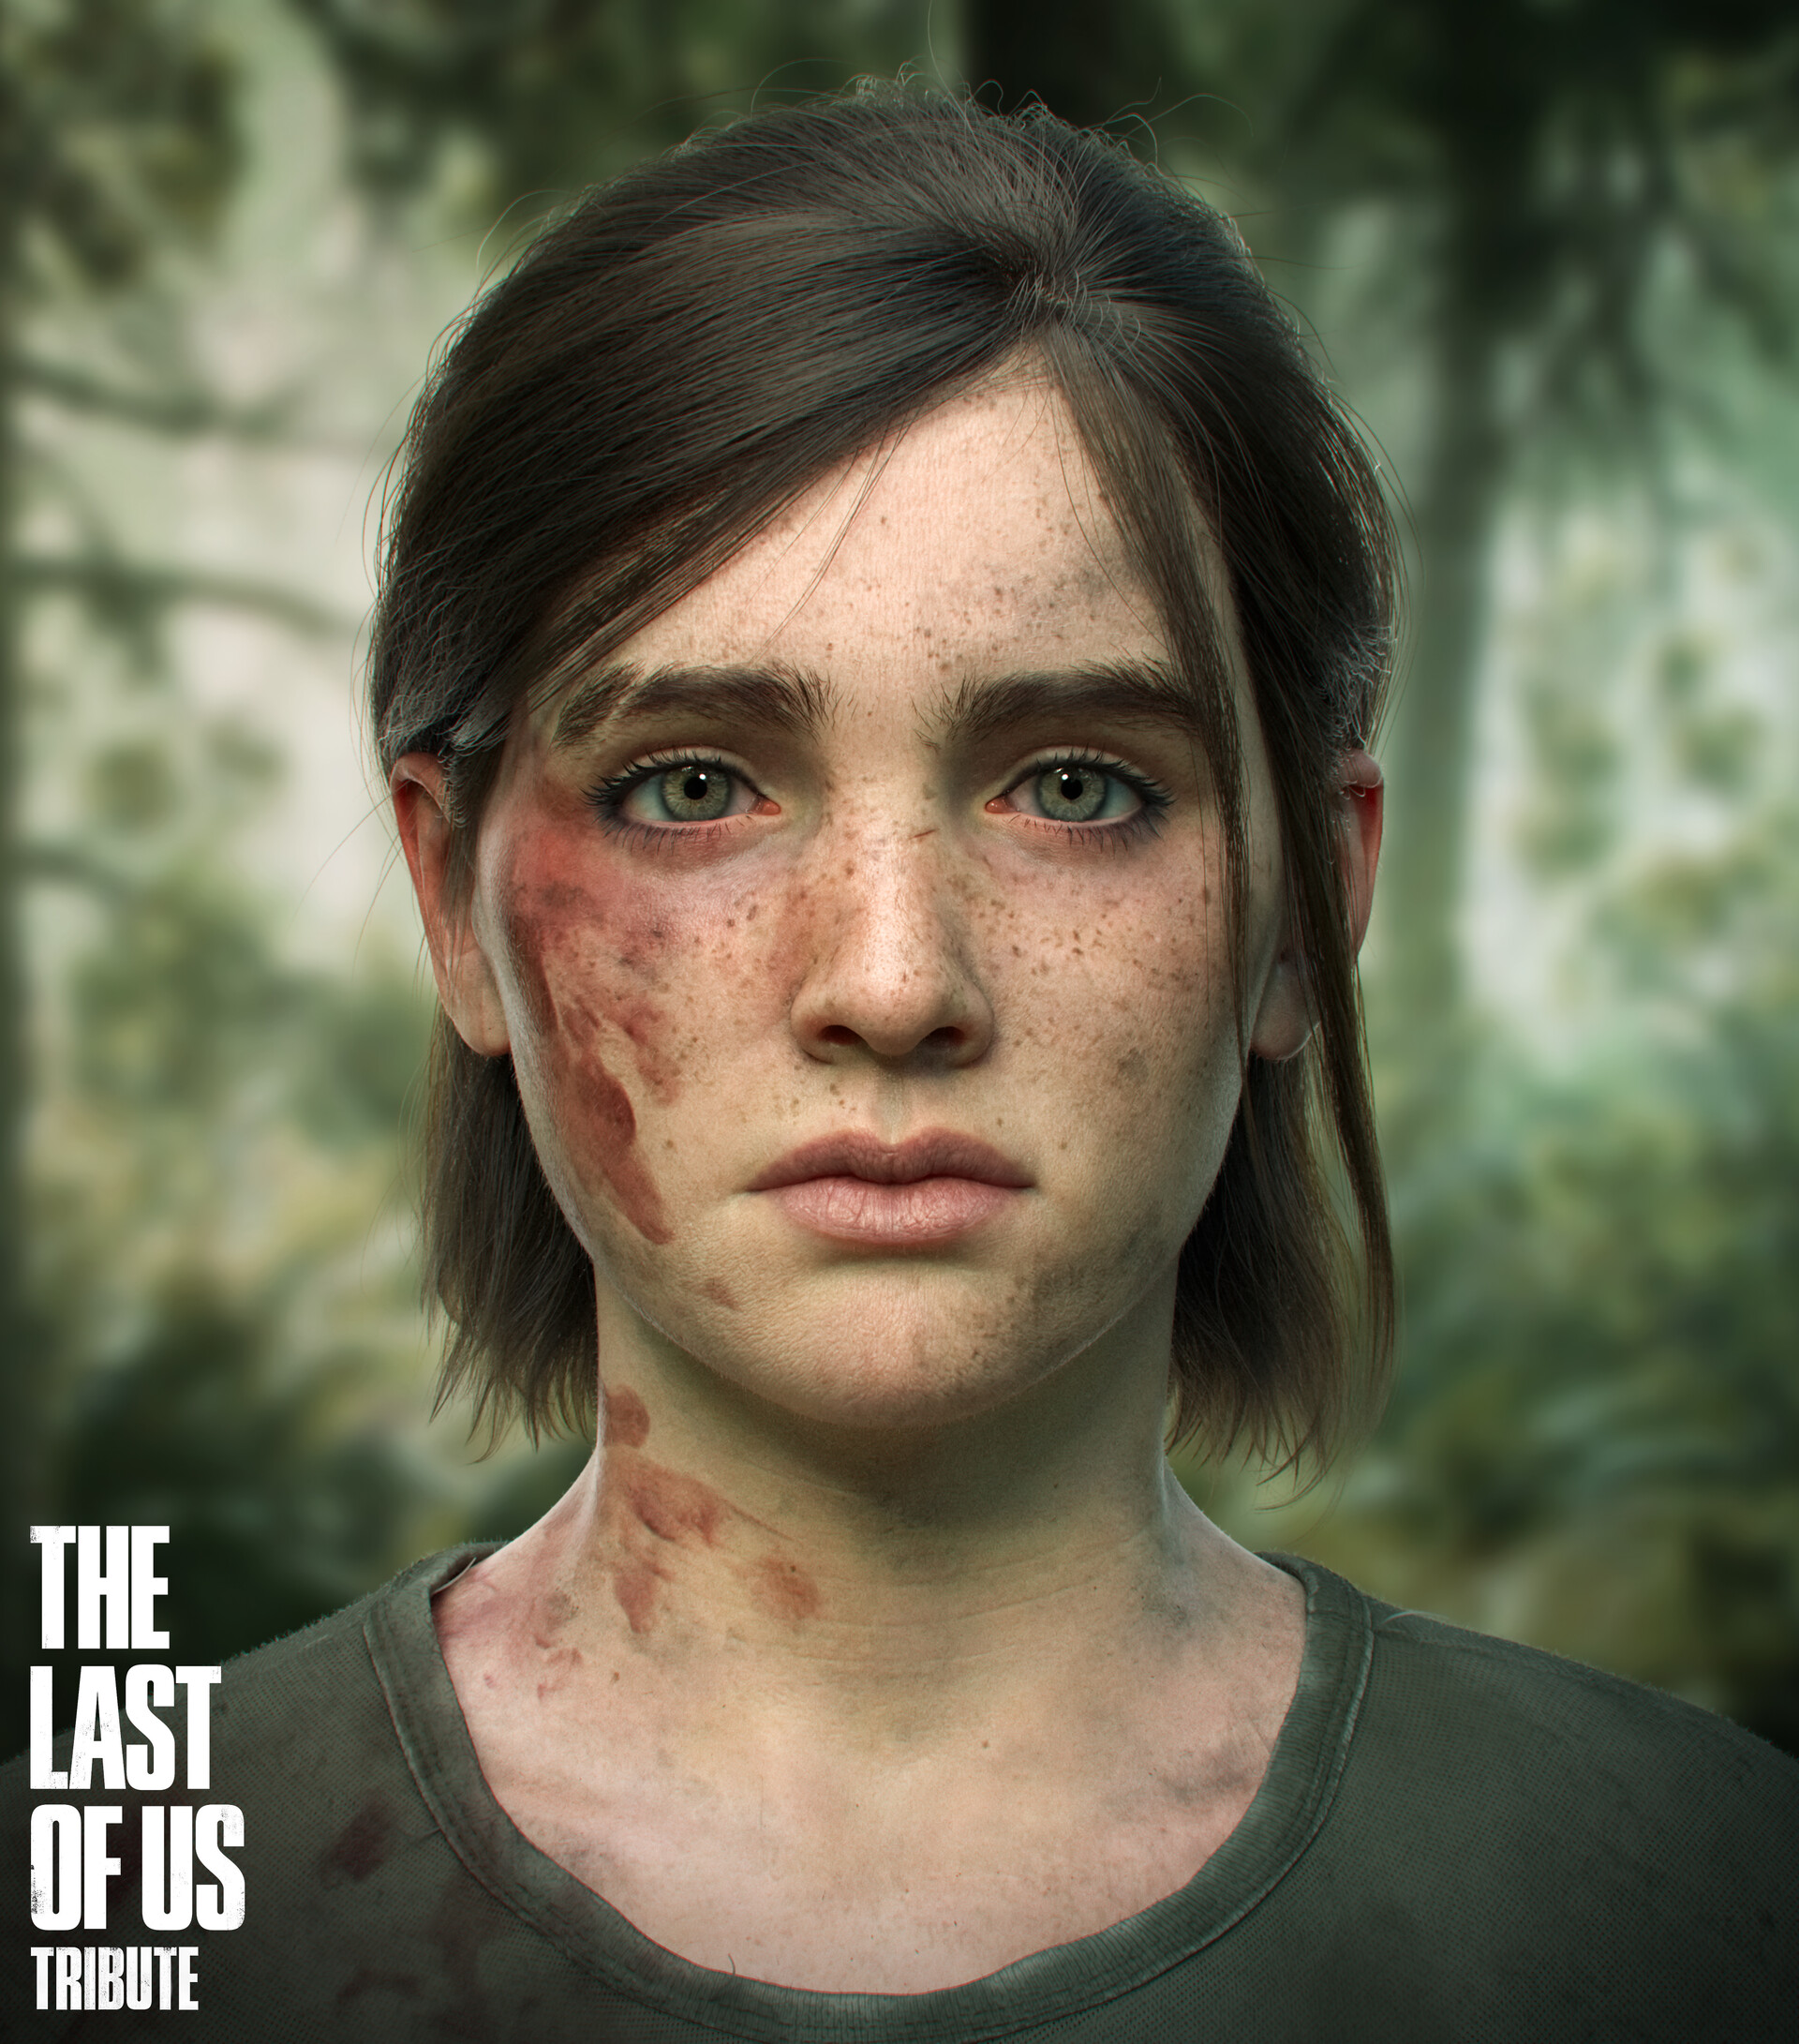 ArtStation - Ellie - The Last of Us Part II